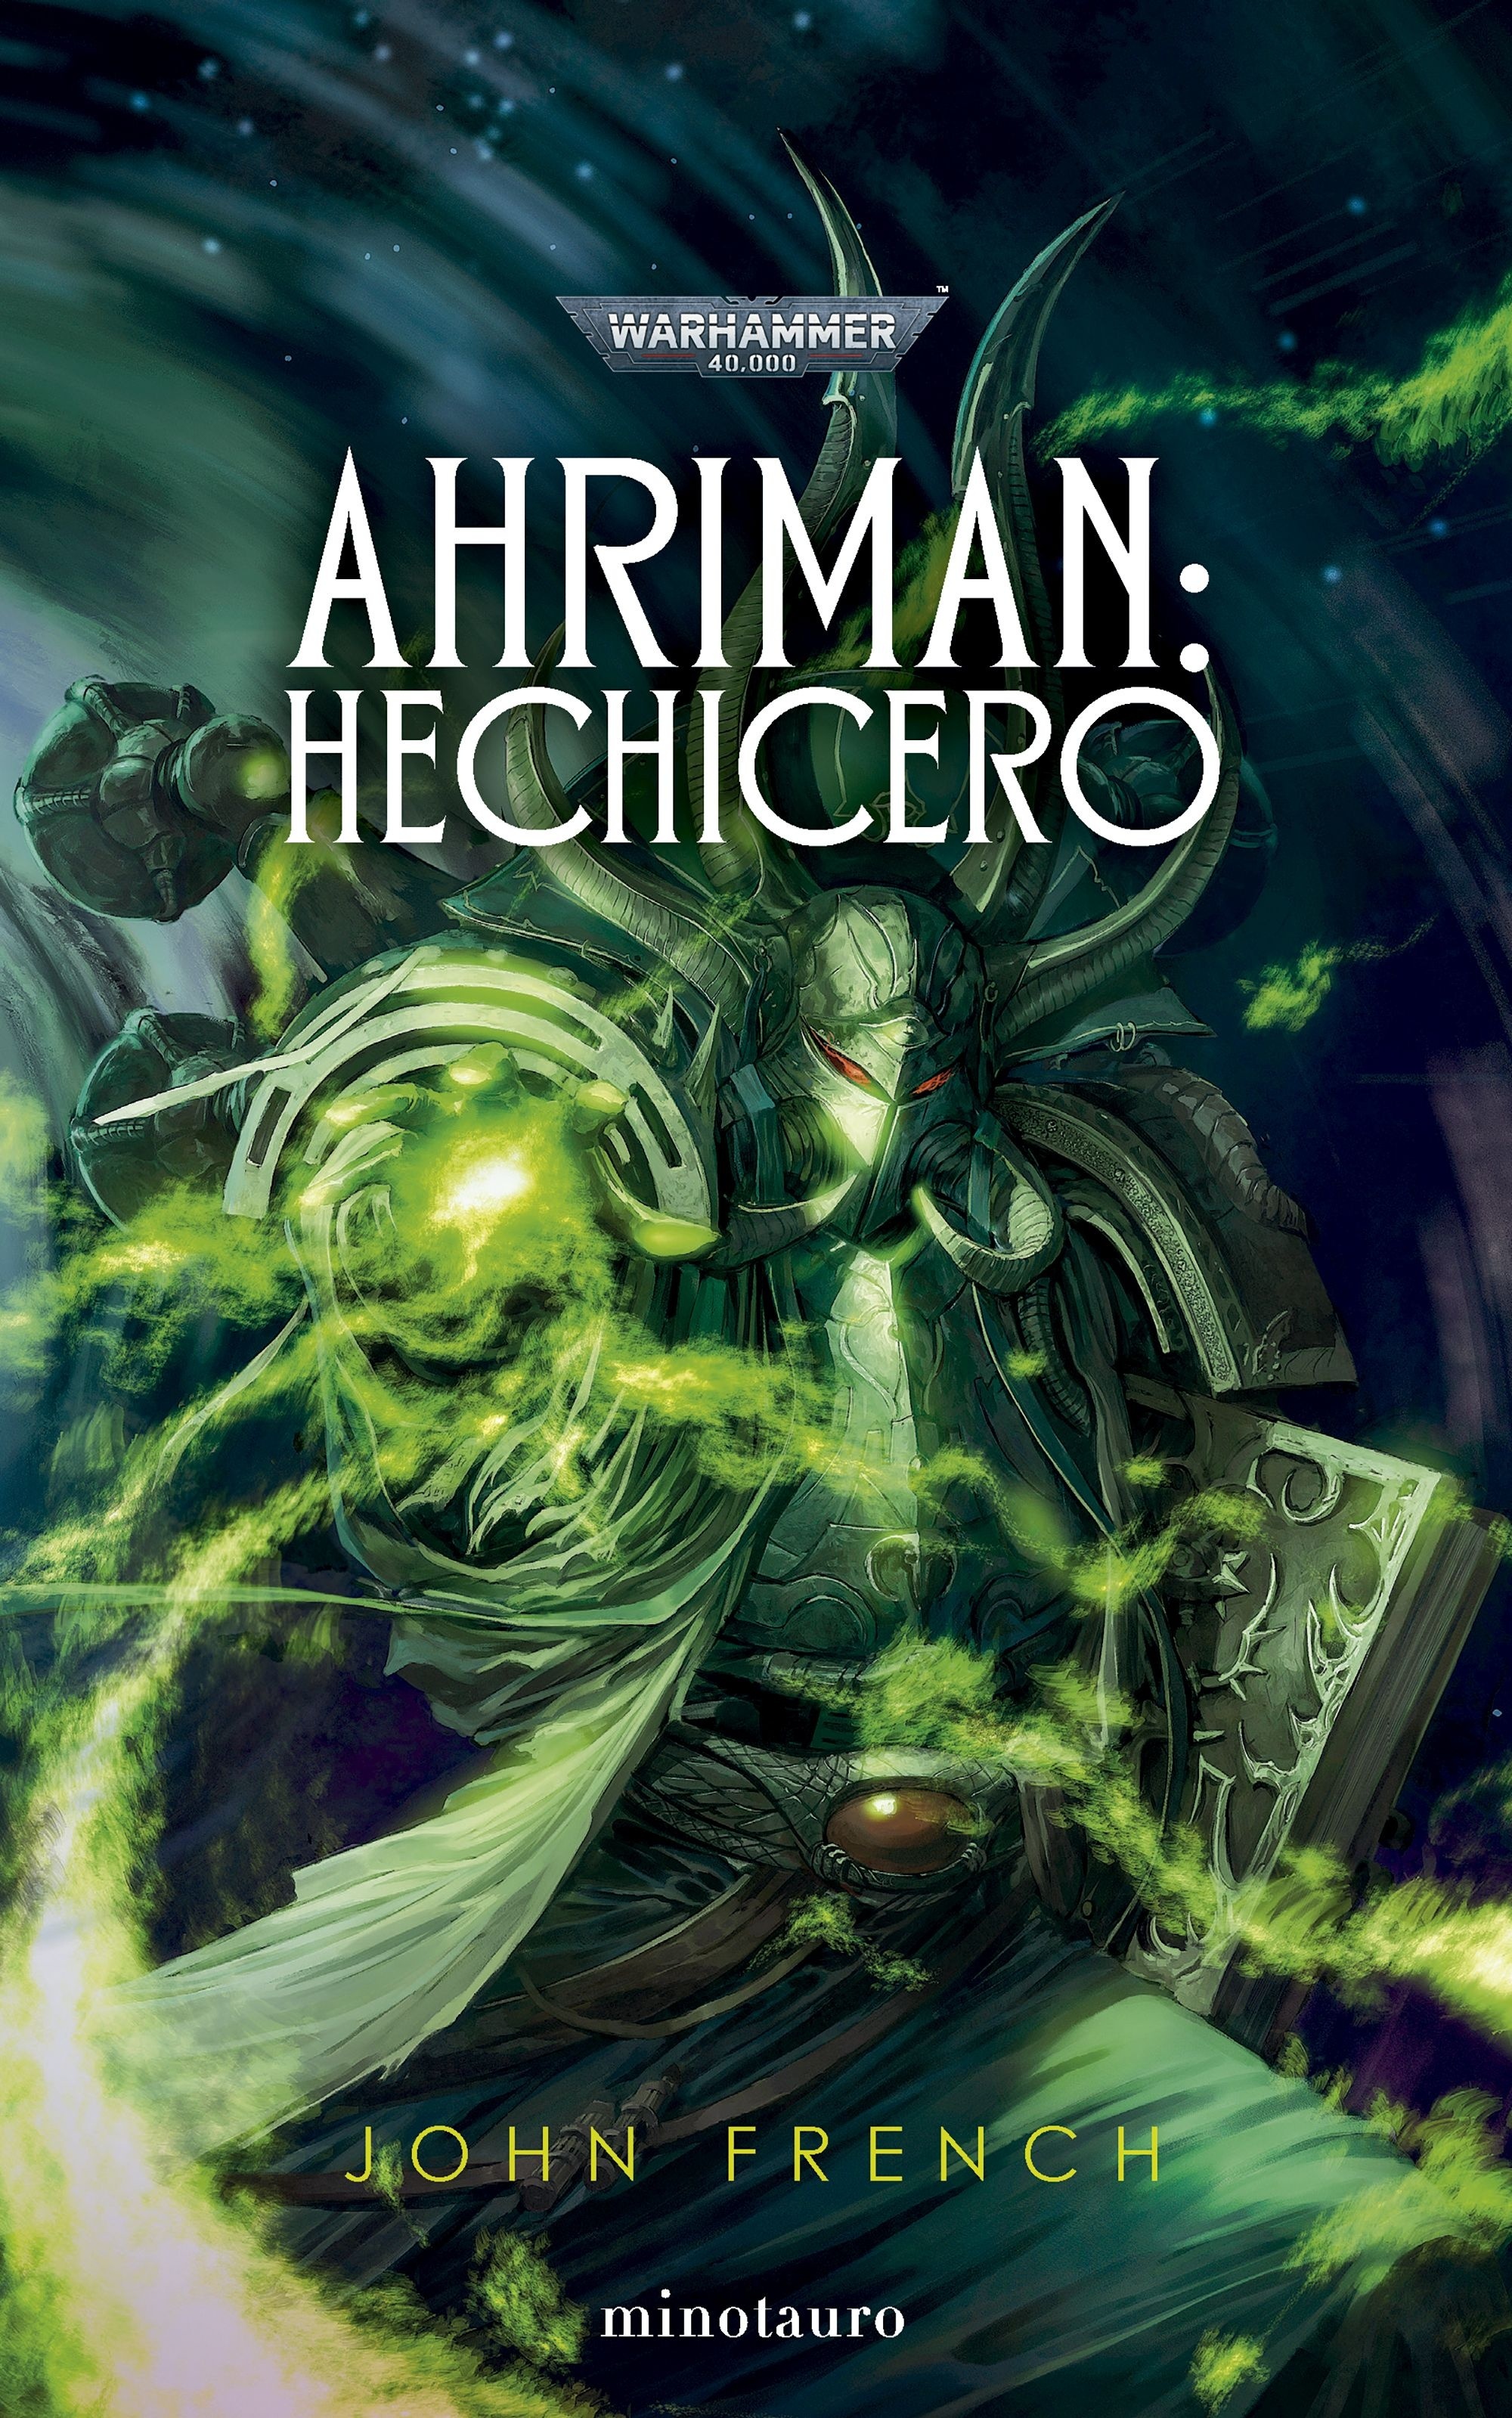 Ahriman: Hechicero